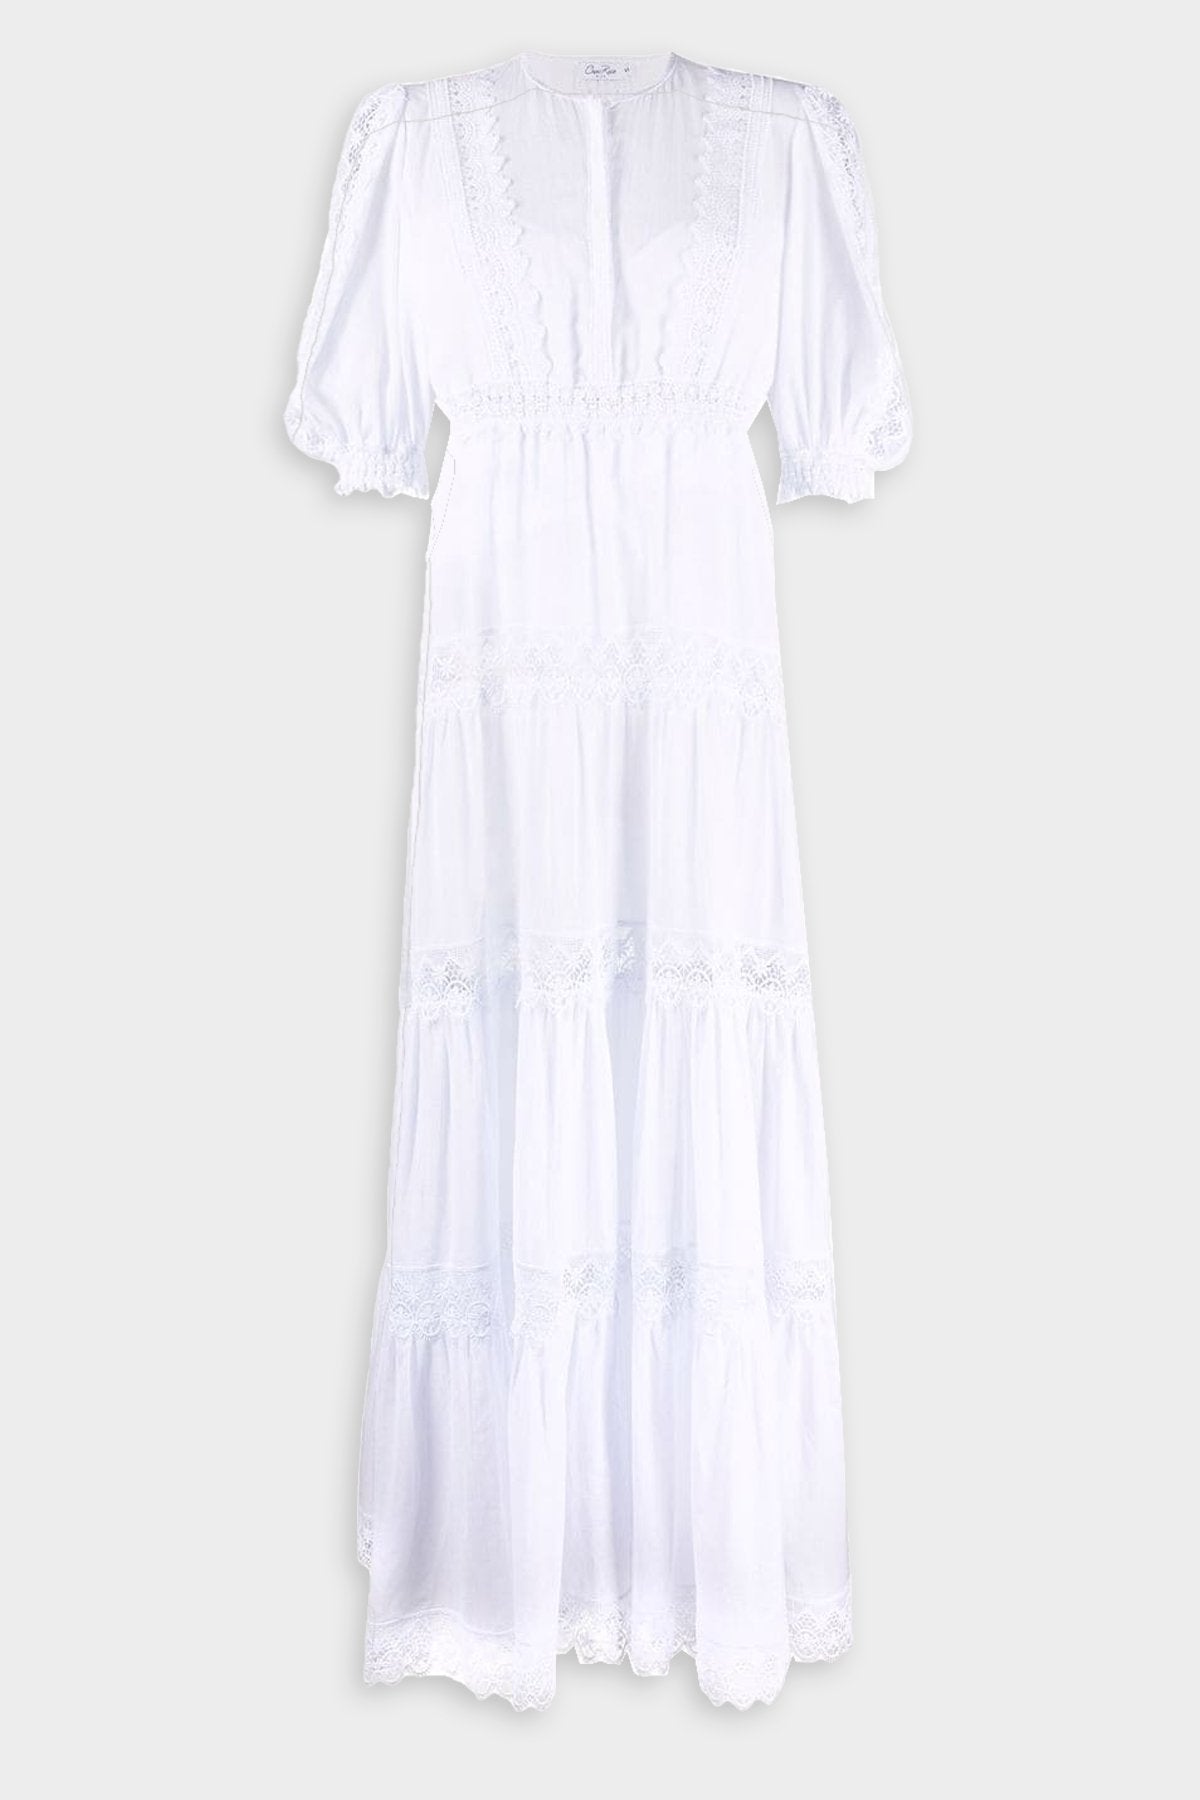 Nadine Long Dress in White - shop-olivia.com